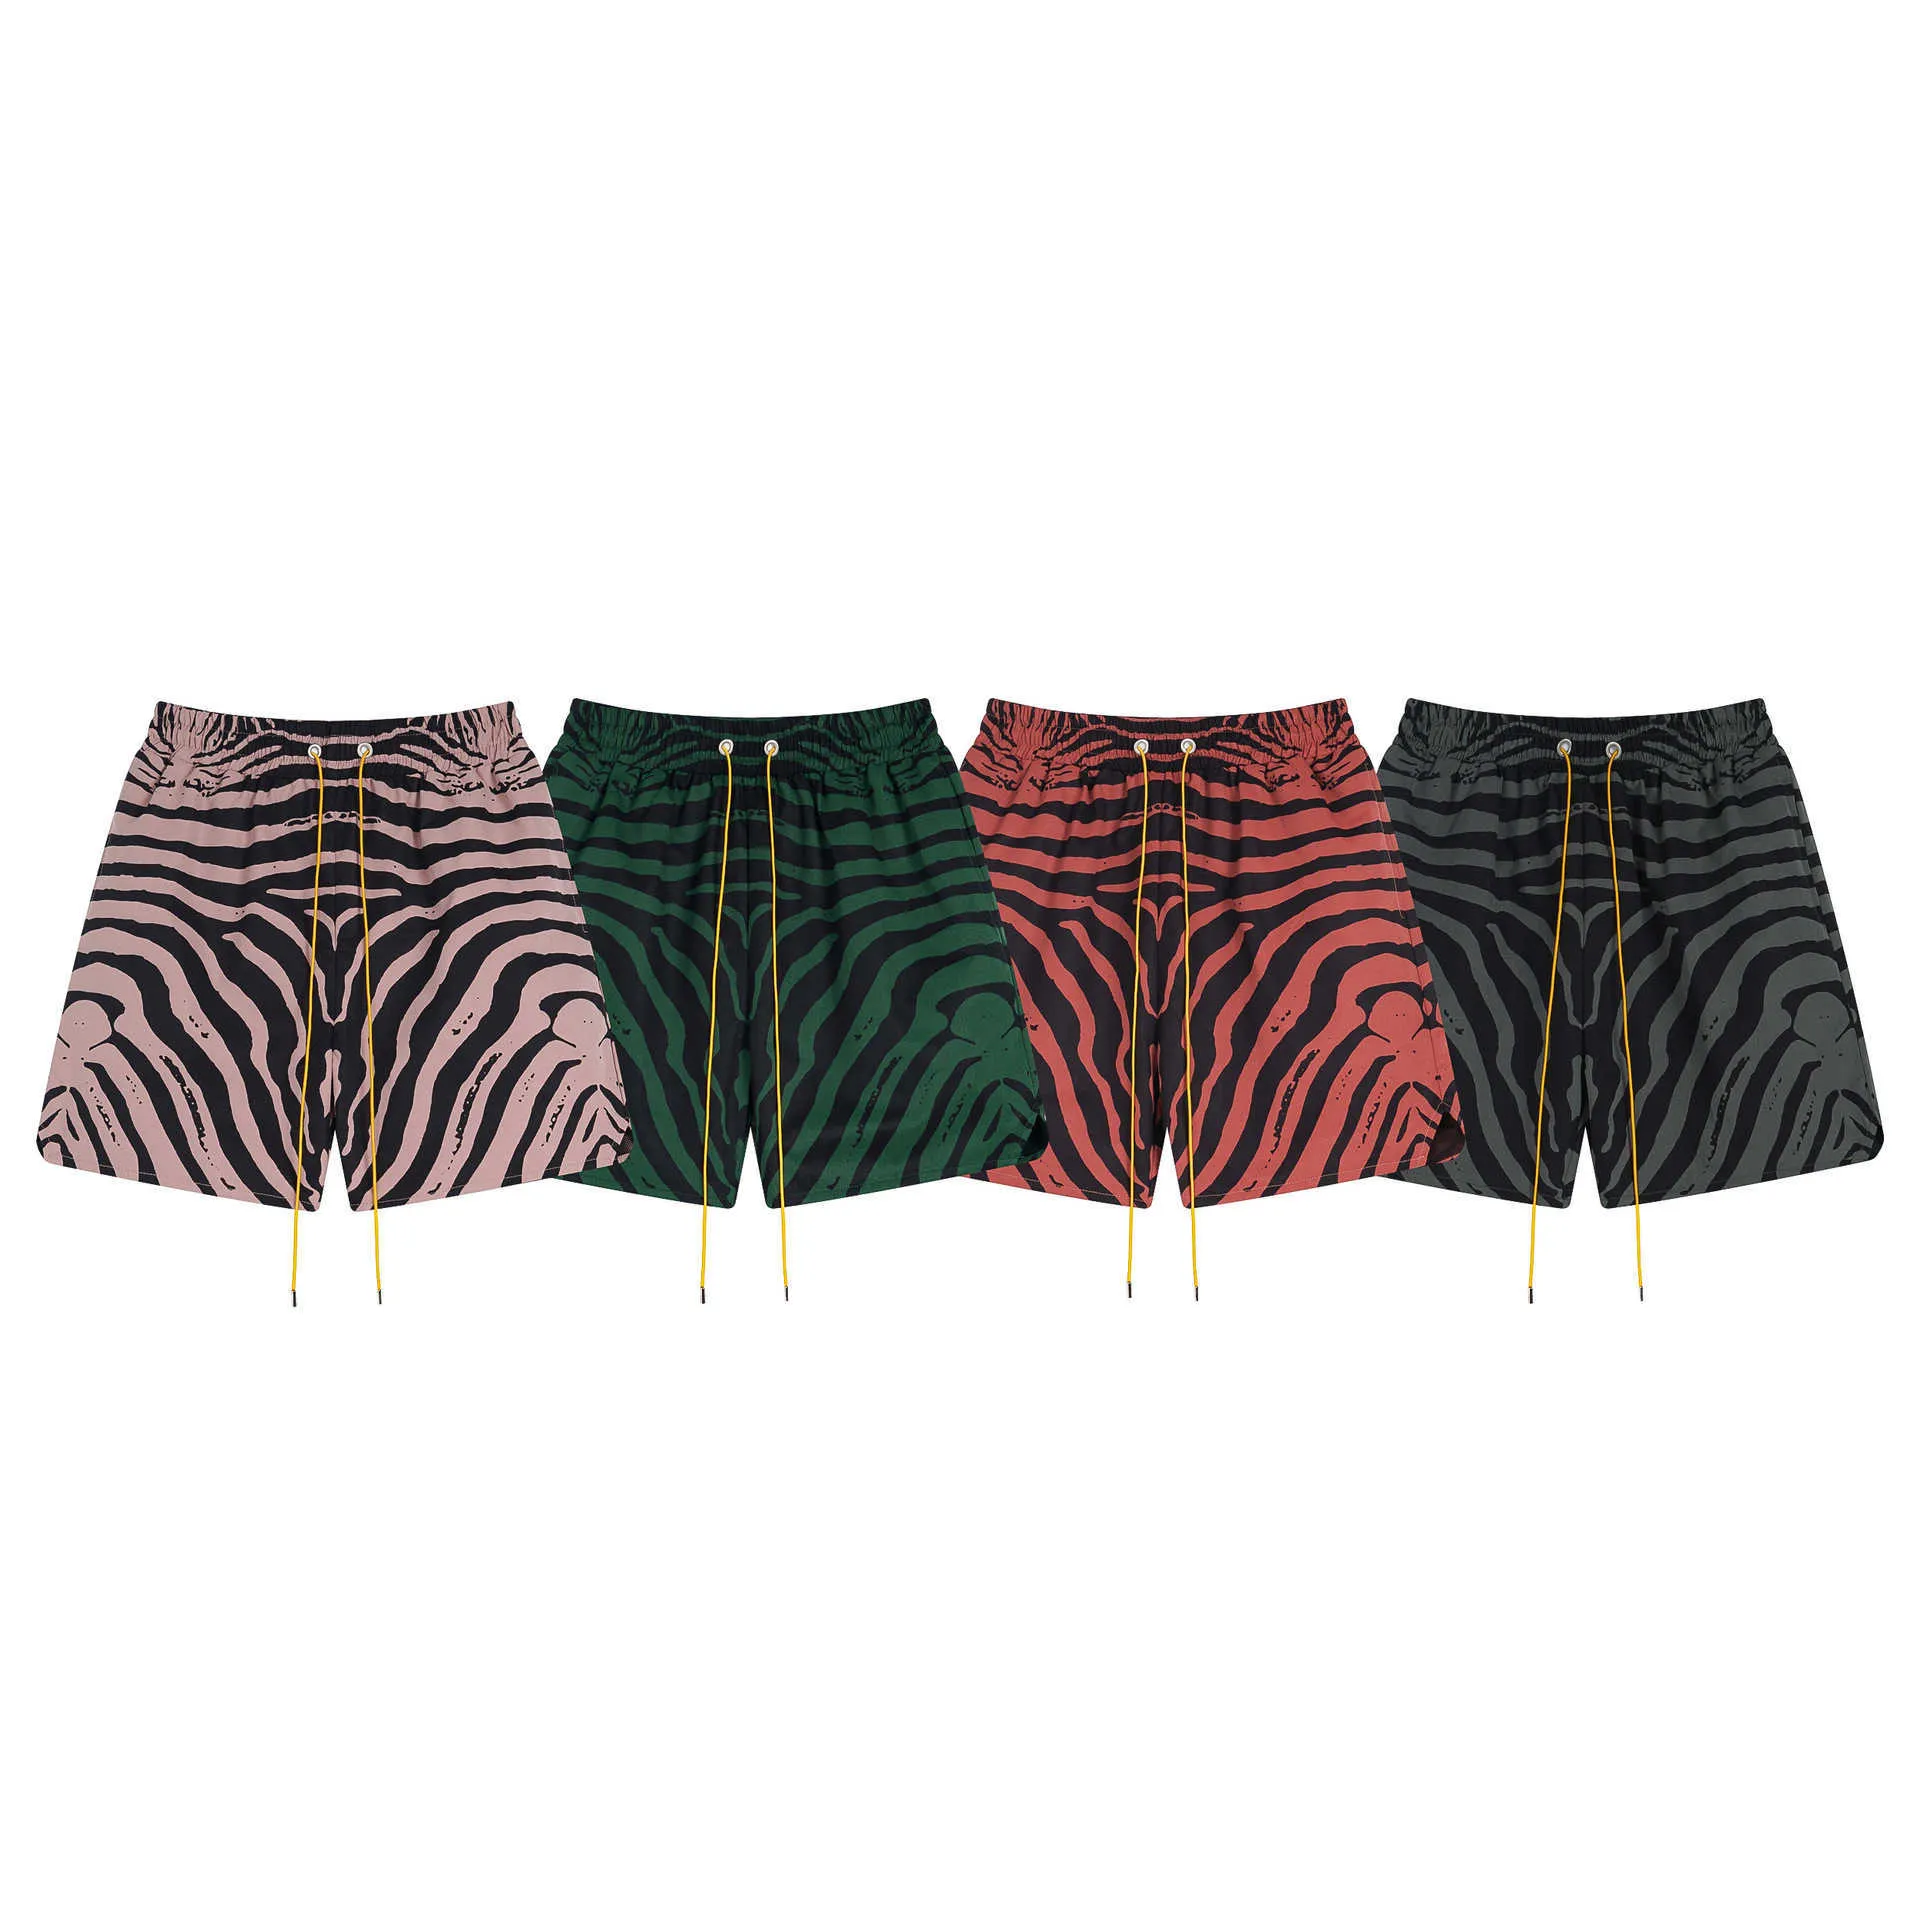 Marca de moda estadounidense Rhude Zebra bordada letra impresa para hombres y shorts versátiles versátiles de holdina holdina